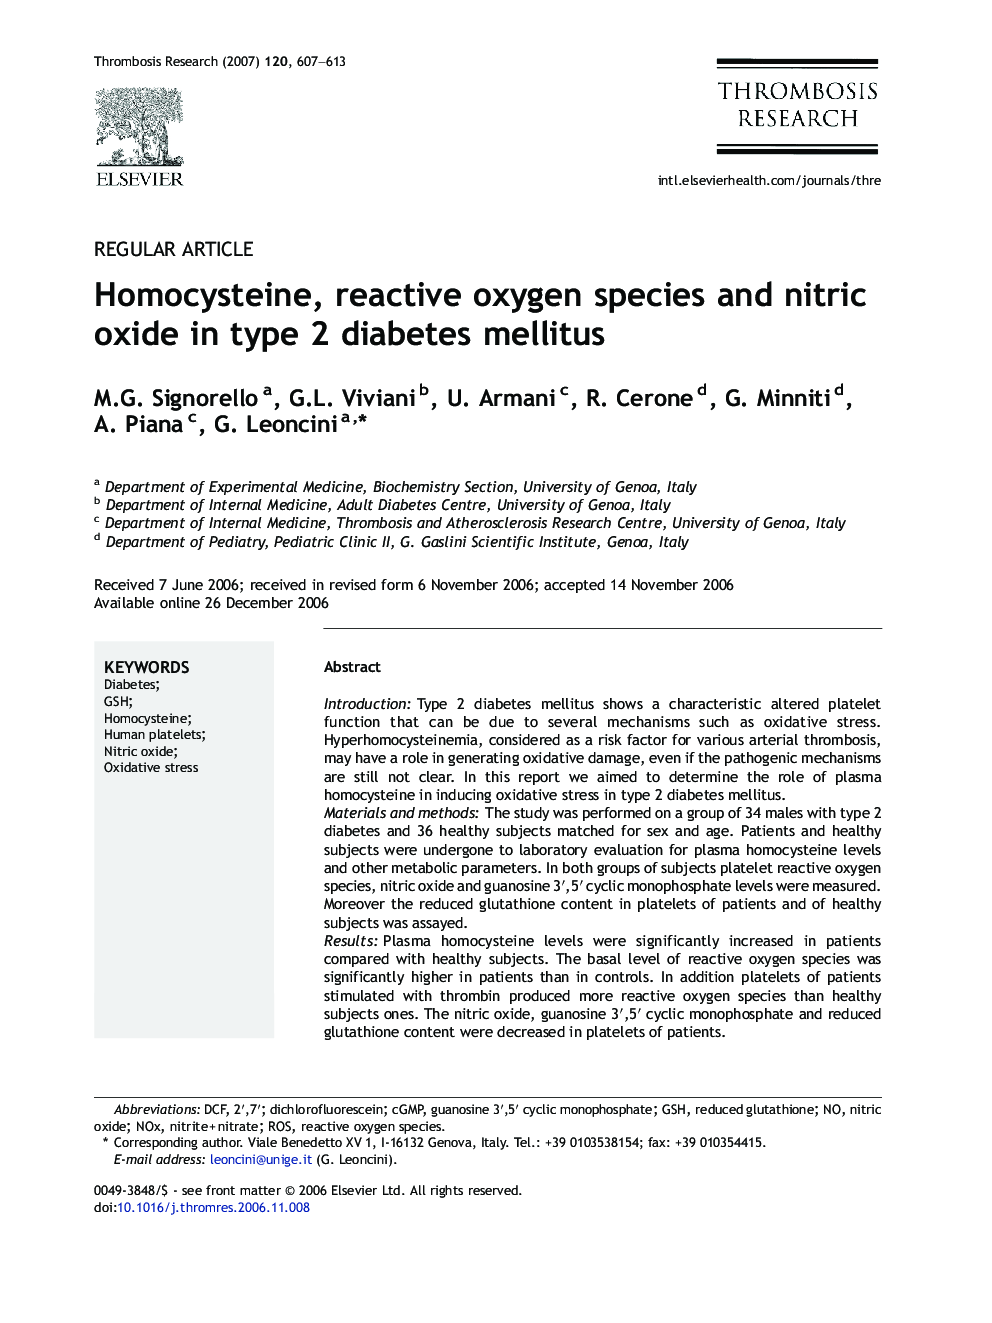 Homocysteine, reactive oxygen species and nitric oxide in type 2 diabetes mellitus